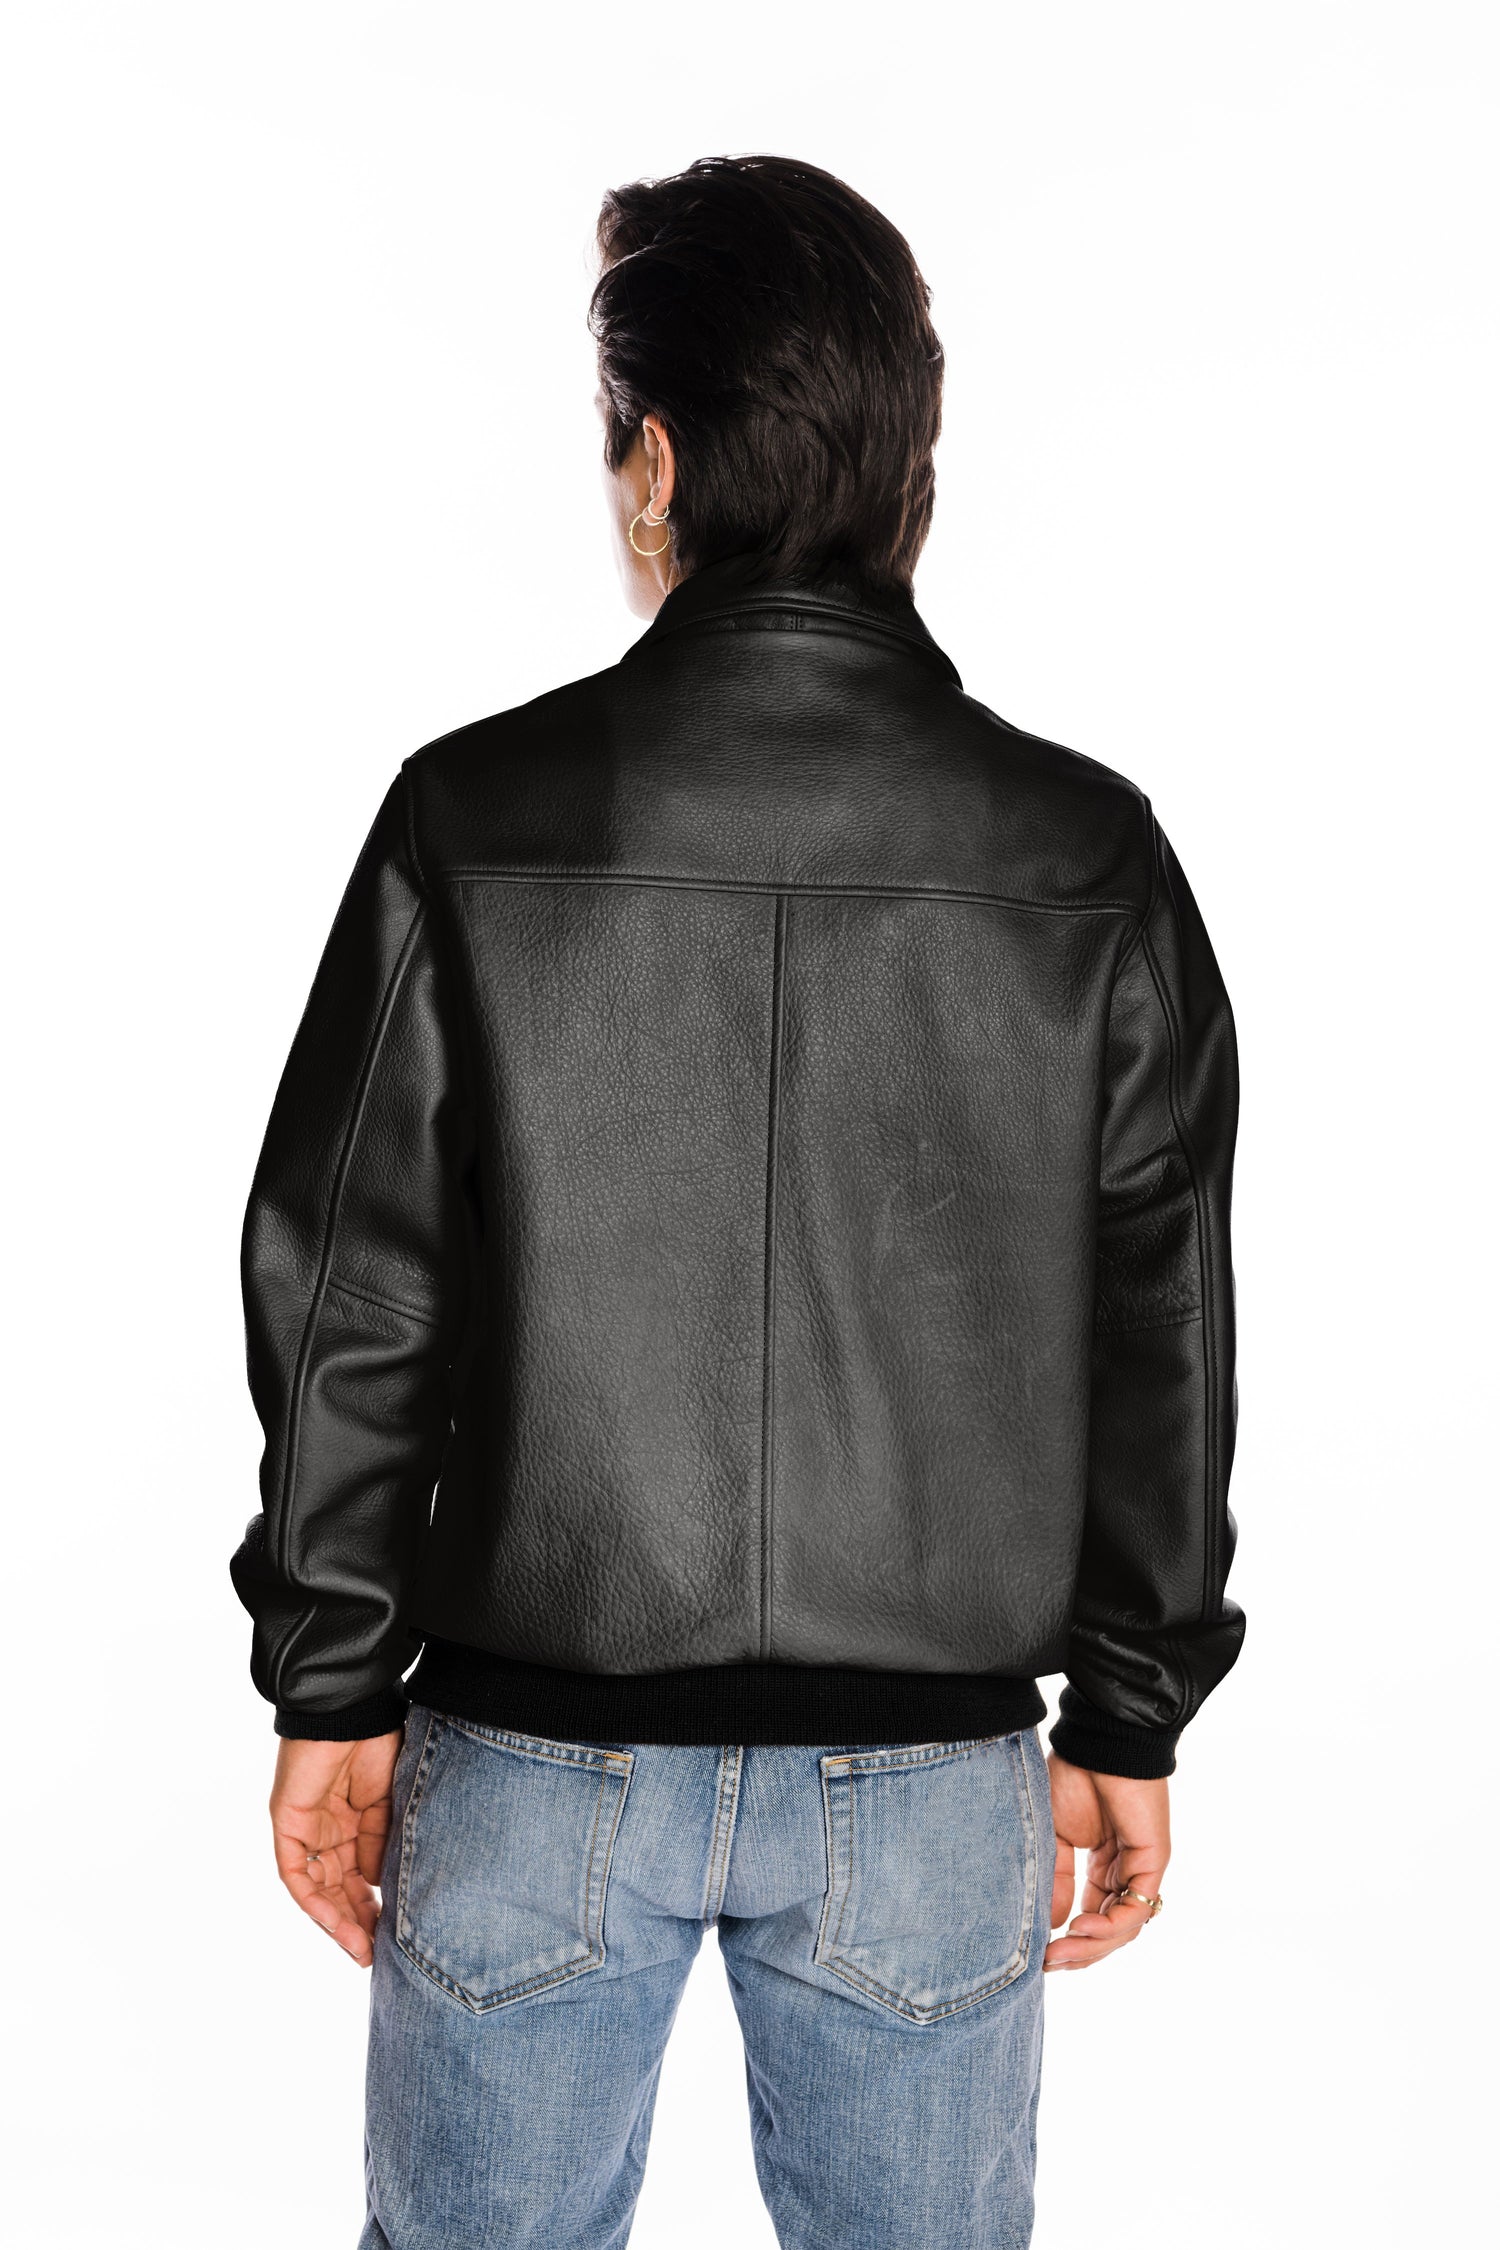 Bedford Leather Baseball Jacket in Black